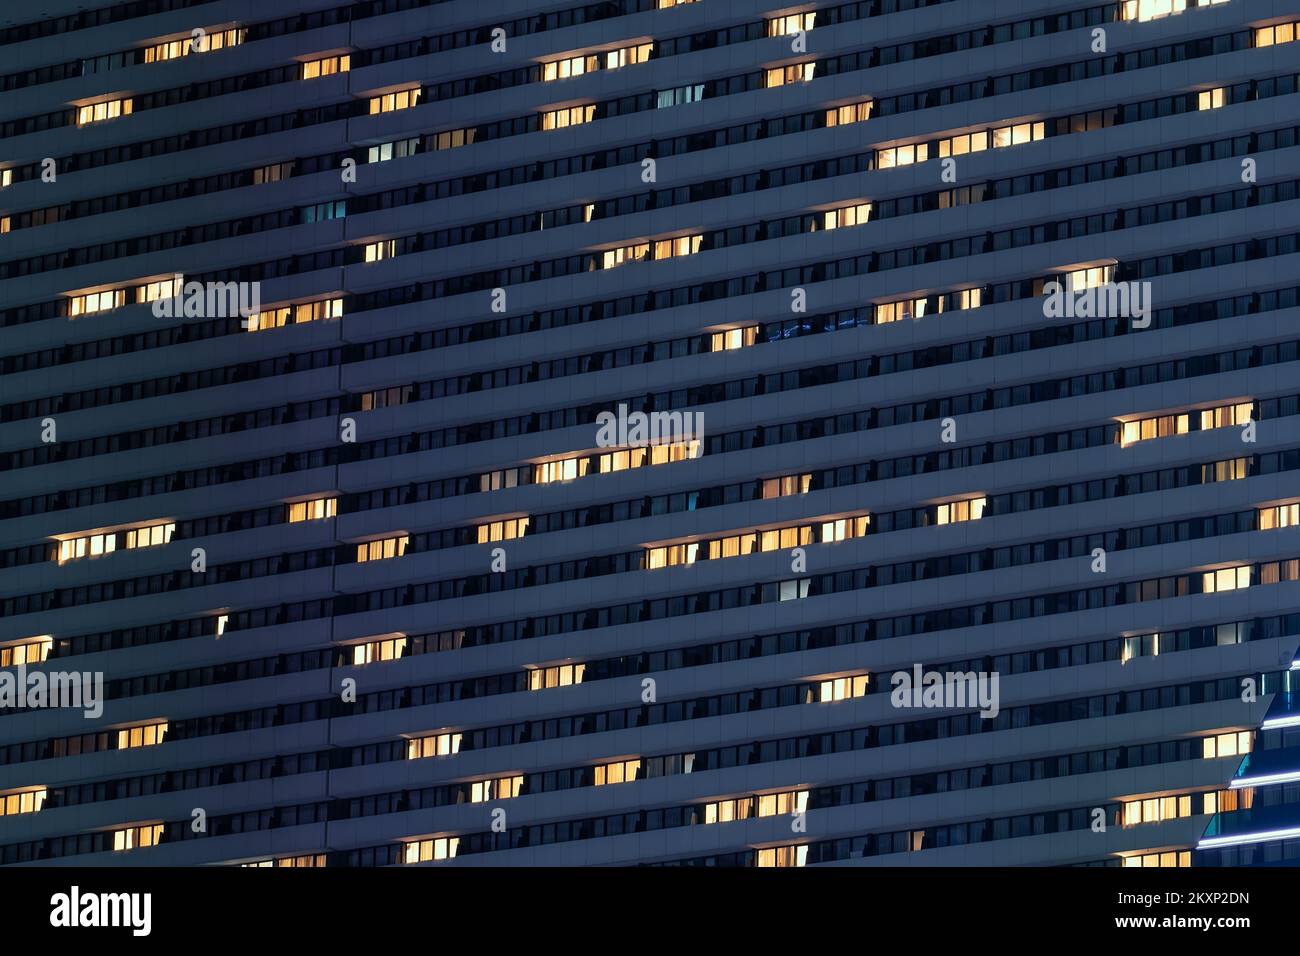 Night facade of high modern building with many illuminated windows. Stock Photo